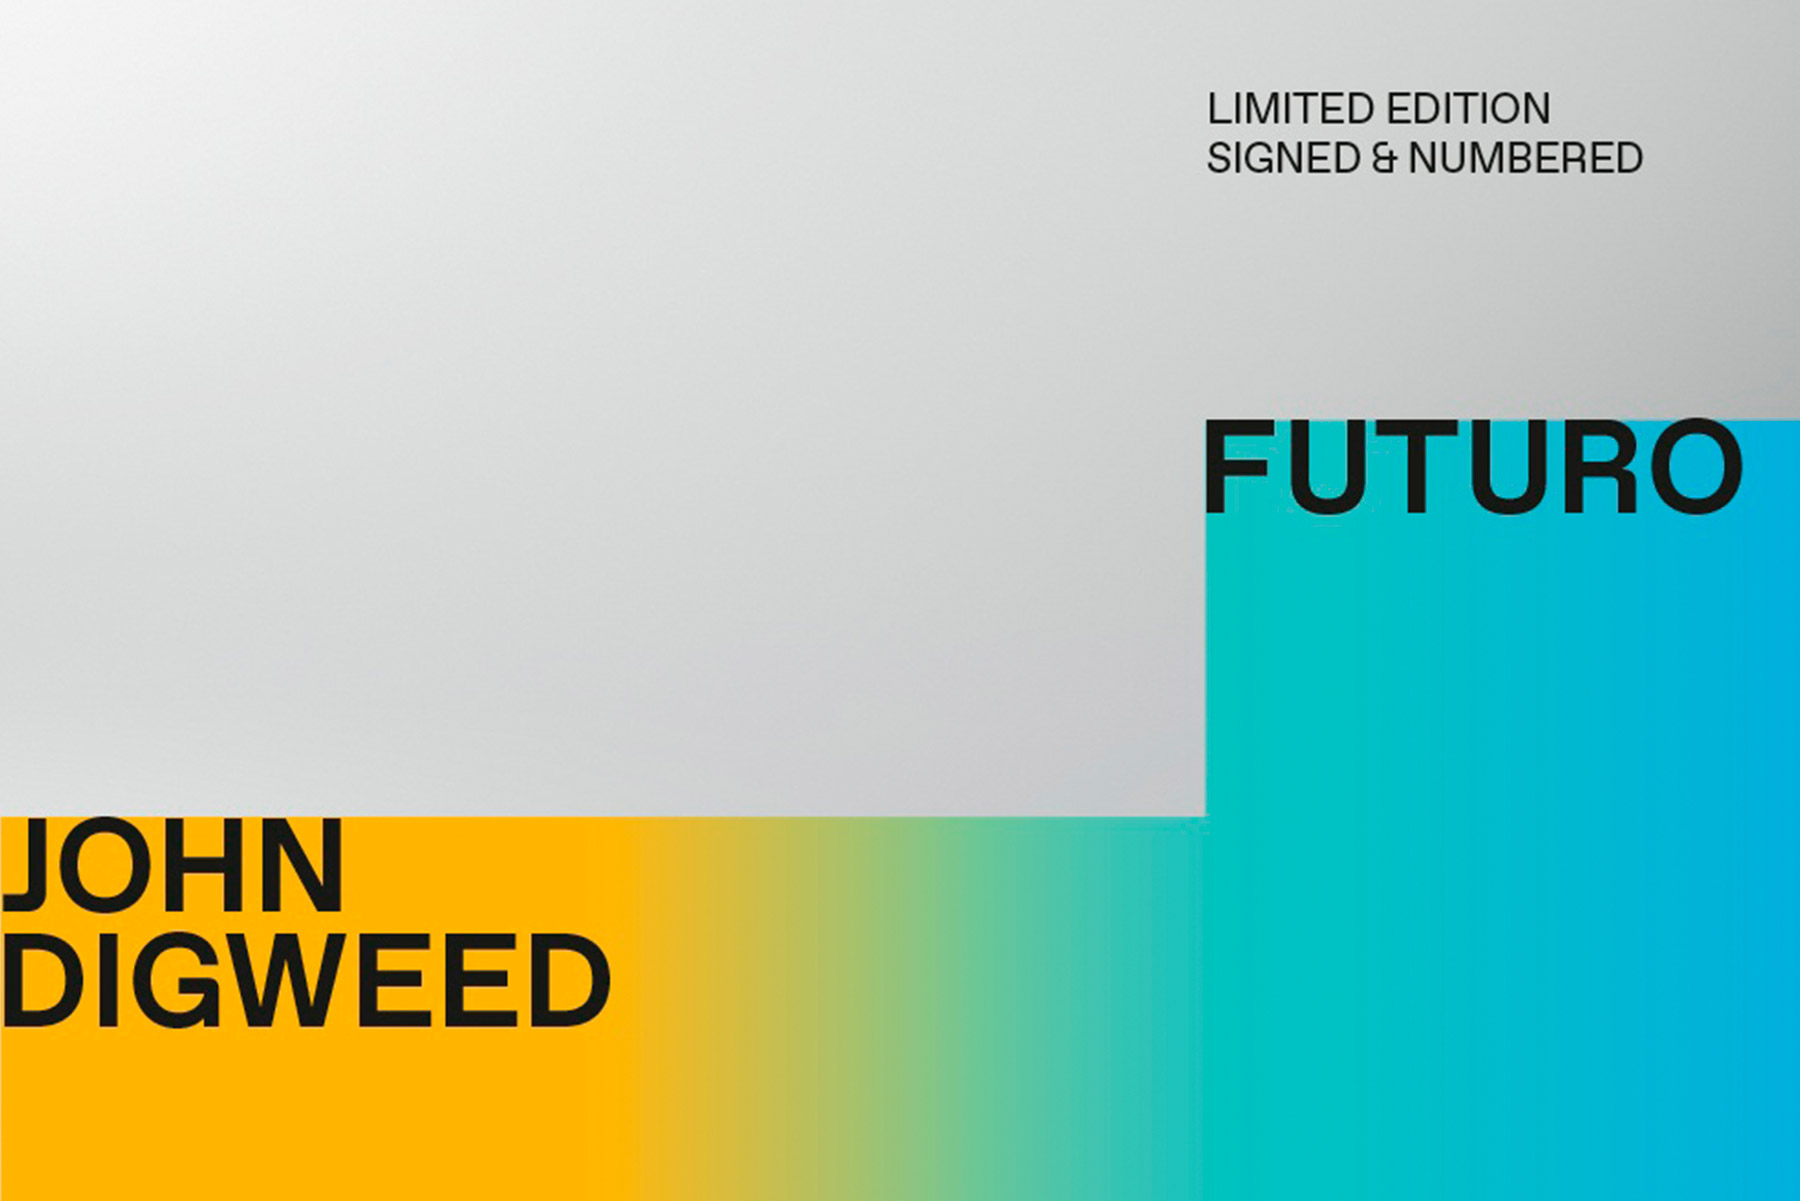 John Digweed announces new album ‘Futuro’